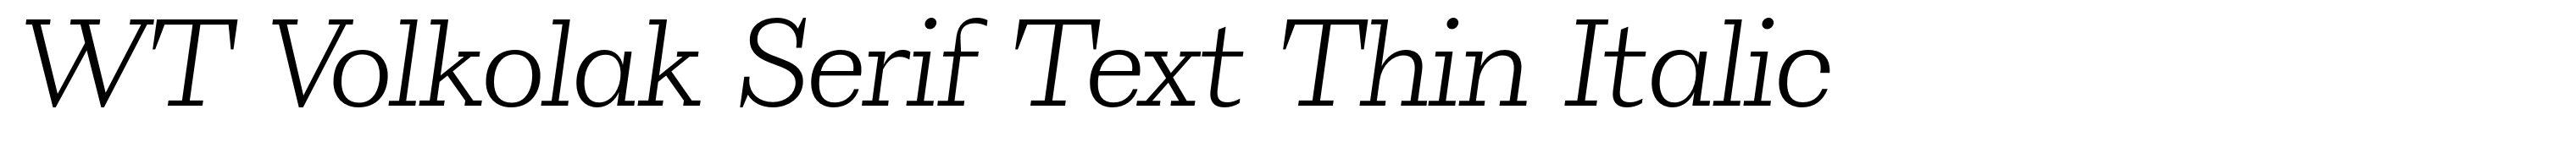 WT Volkolak Serif Text Thin Italic